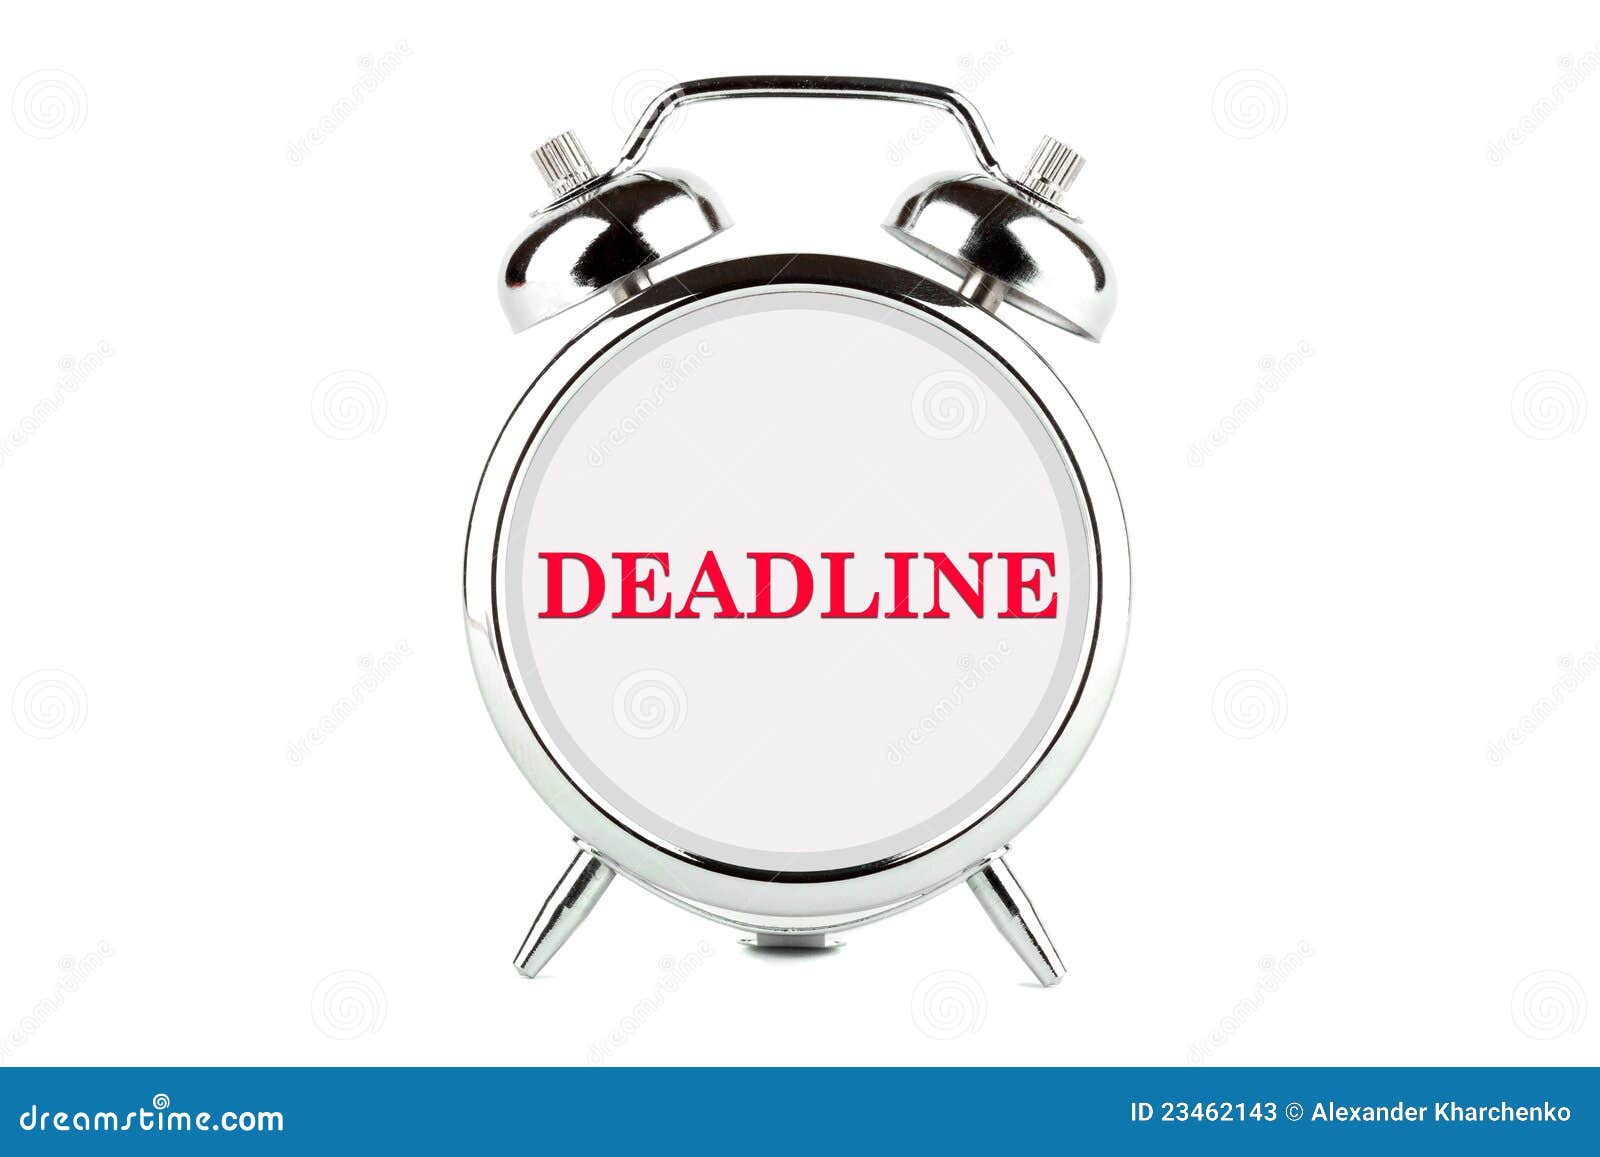 deadline word on the alarm clock